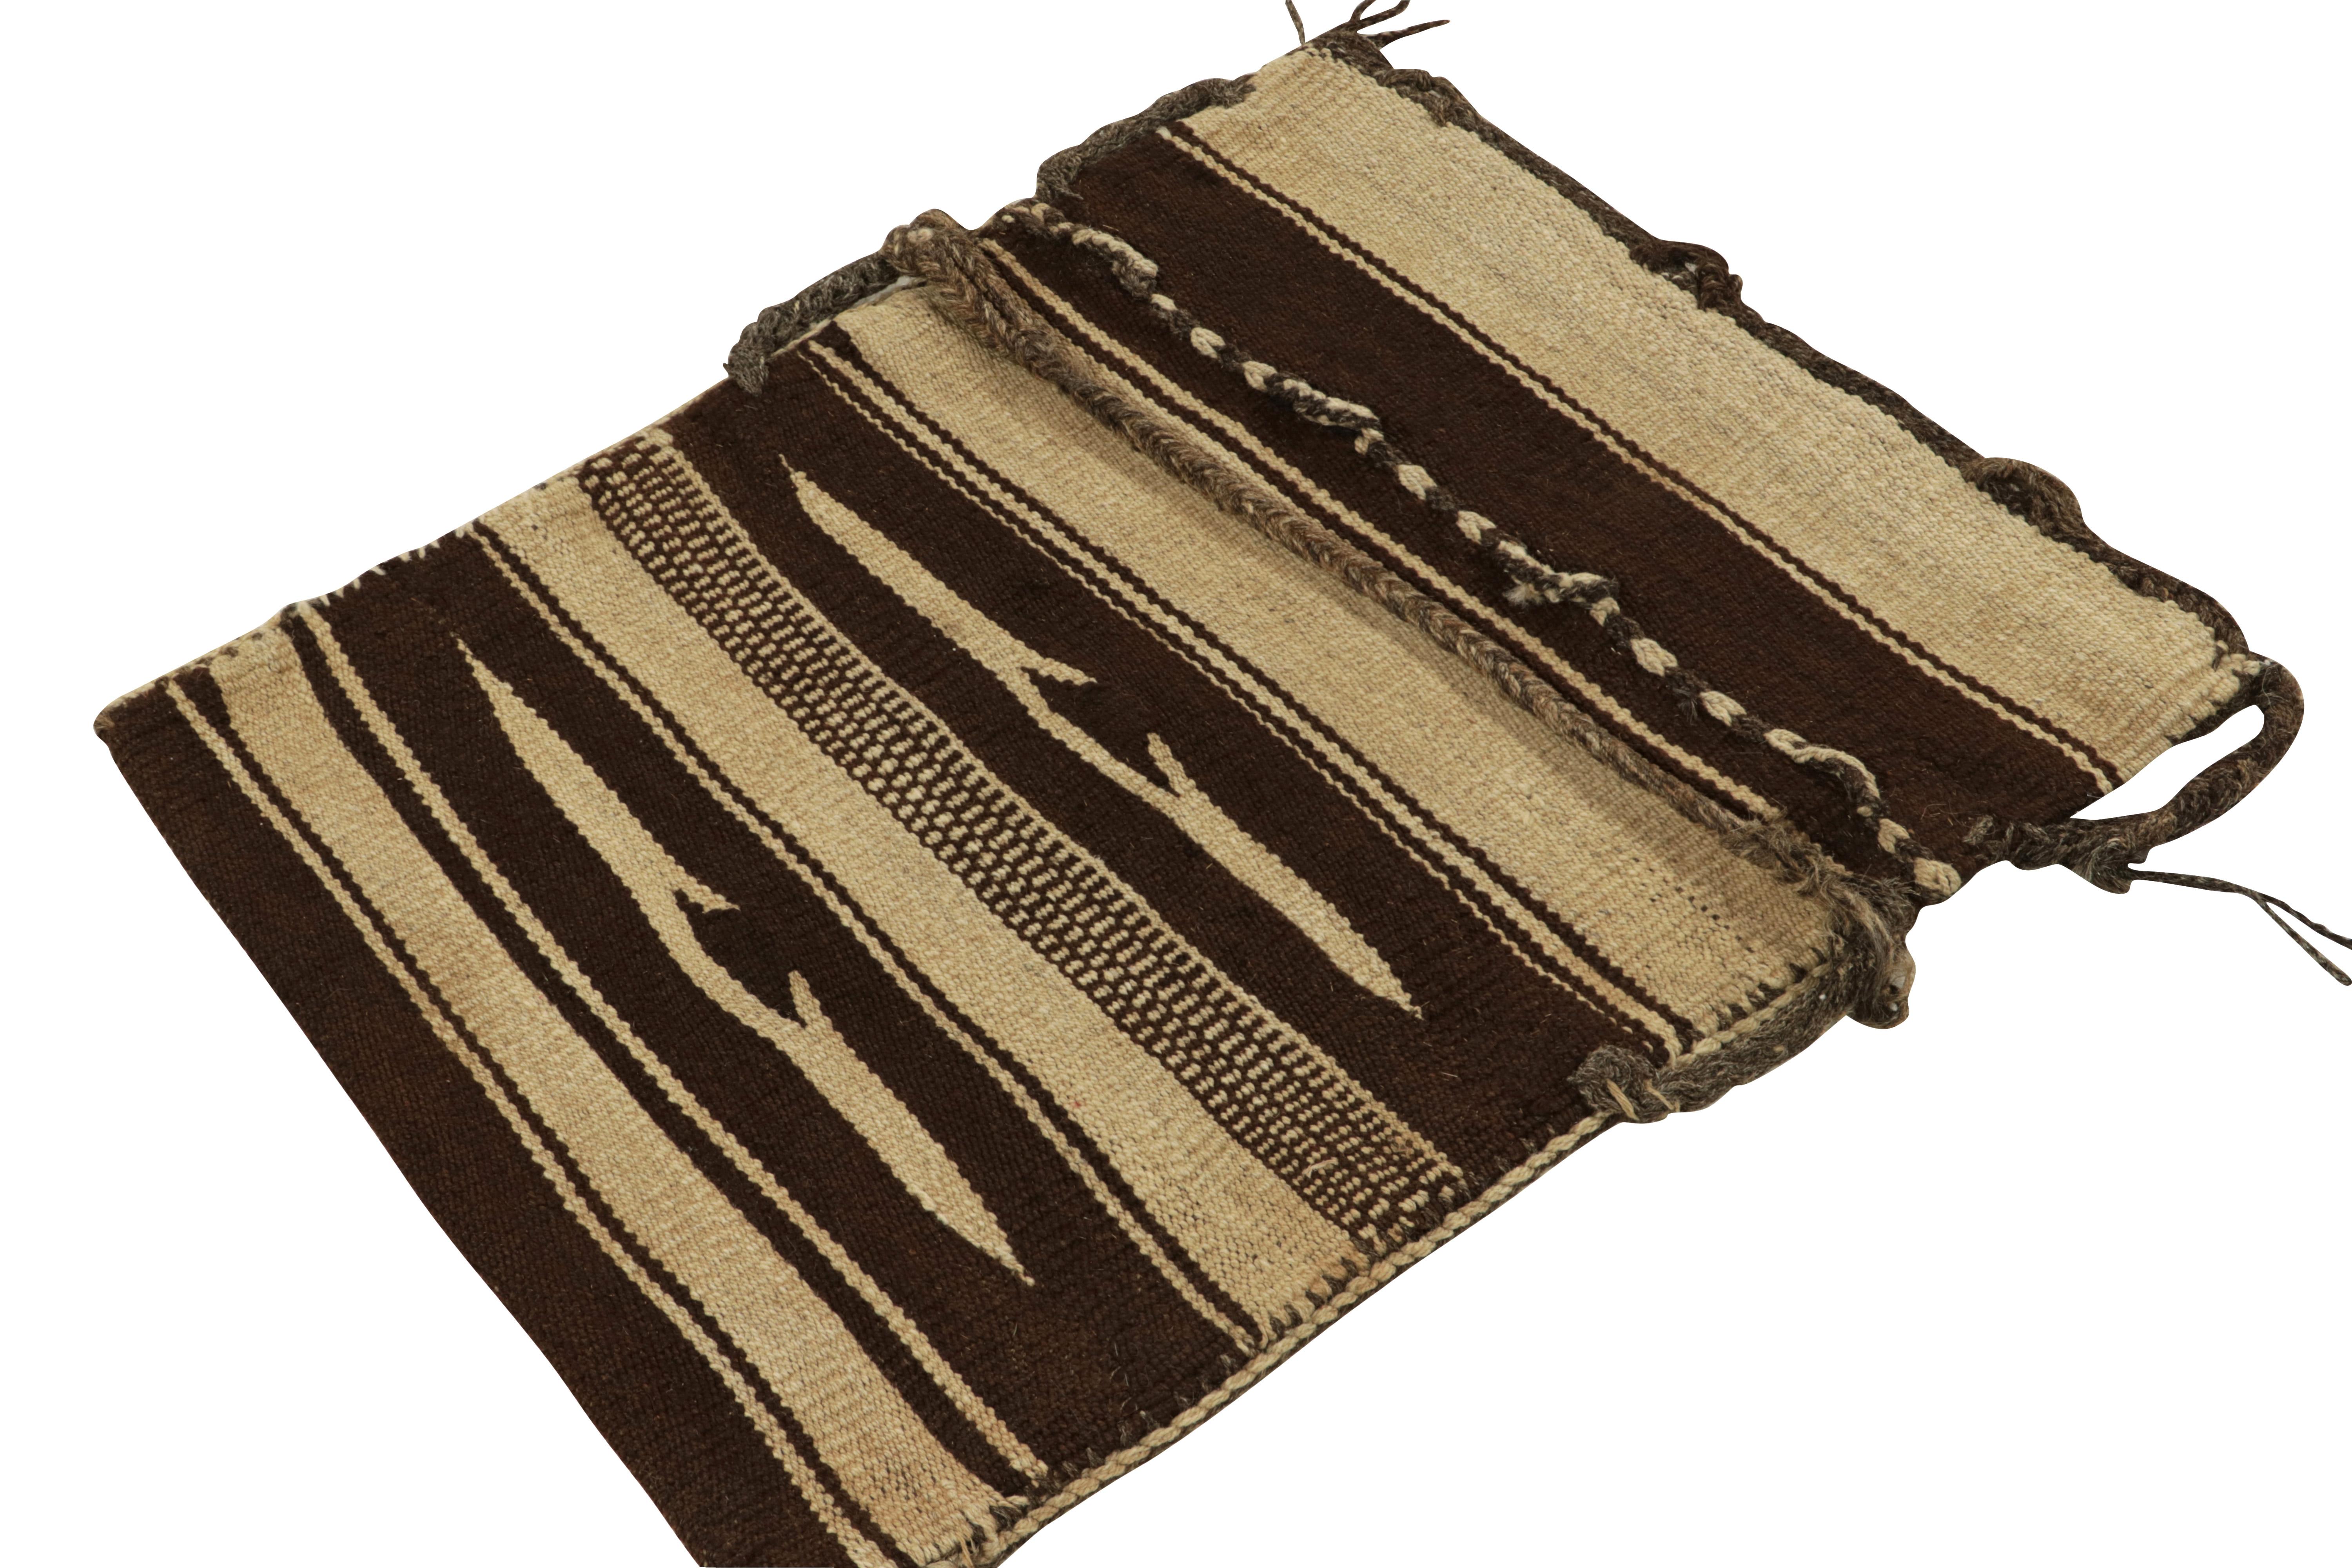 Turkish 1960s Vintage Kilim Rug in Beige, Brown Tribal Bag Design by Rug & Kilim For Sale